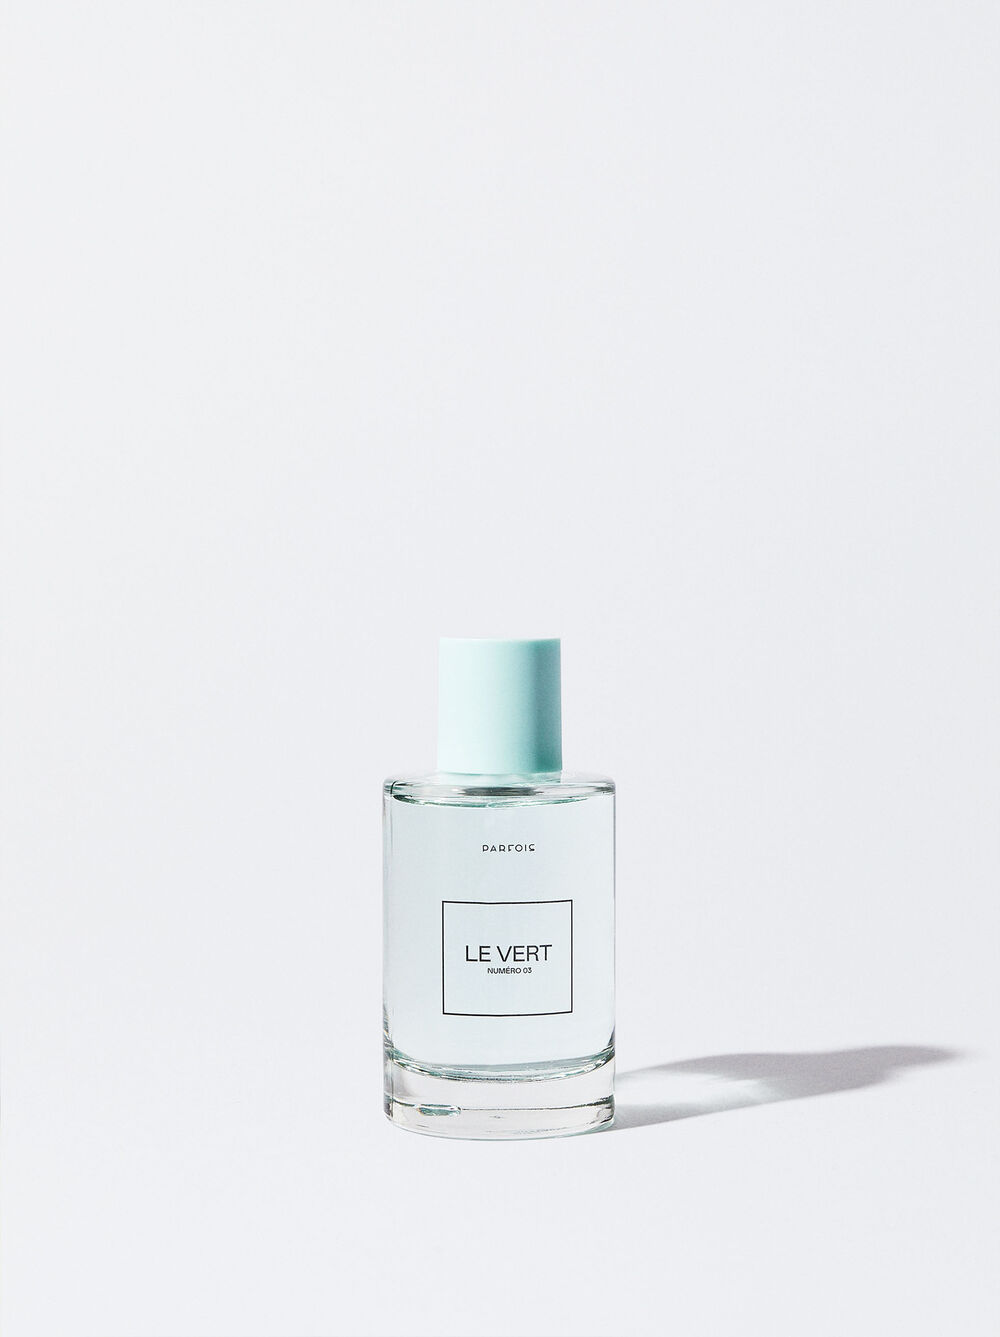 Le Numéro 03 Perfume - Le Vert - 100ml